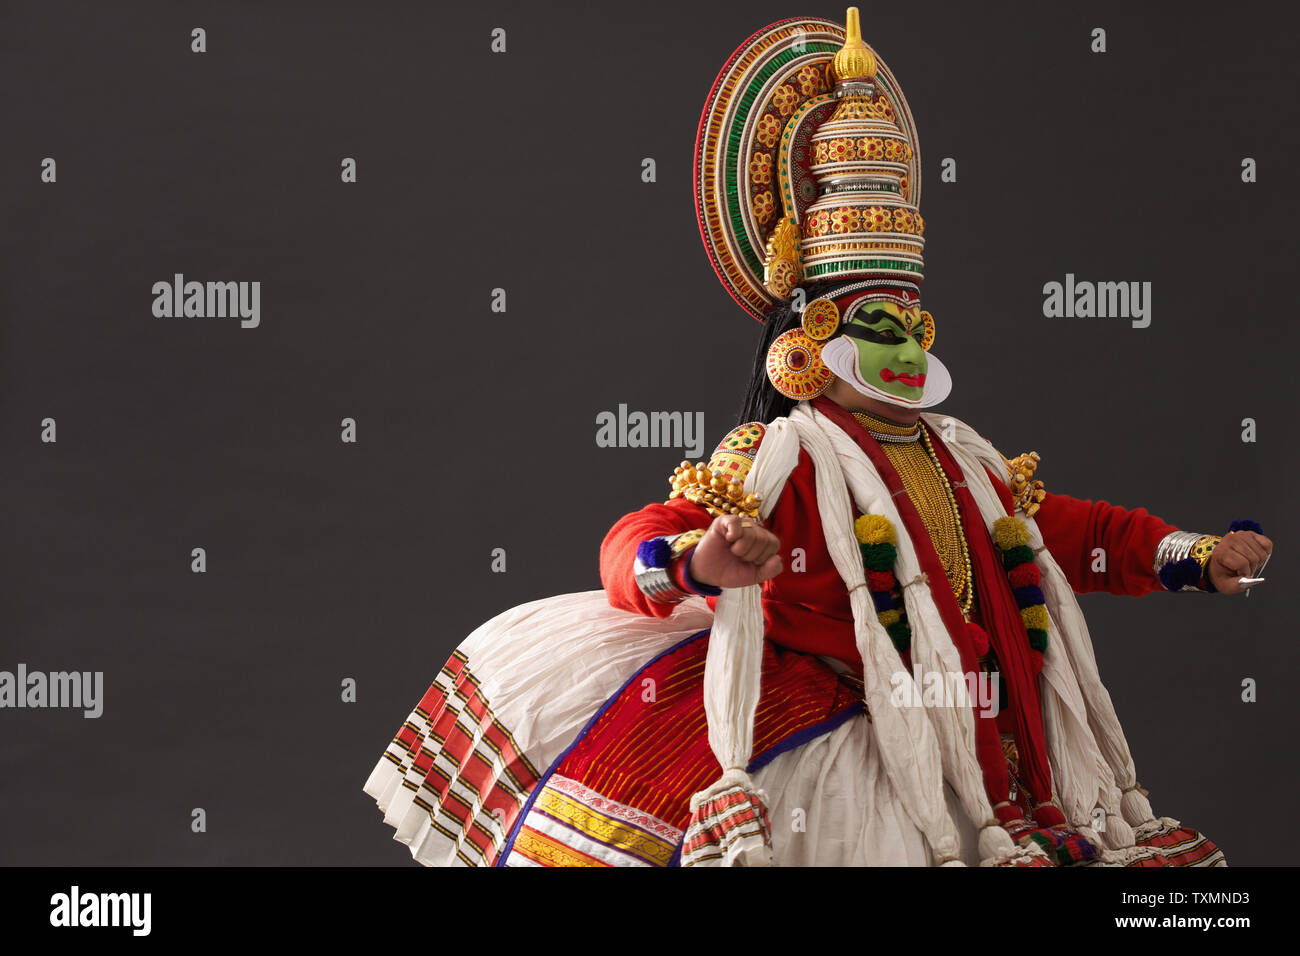 Indian kathakali dancer performing Stock Photo